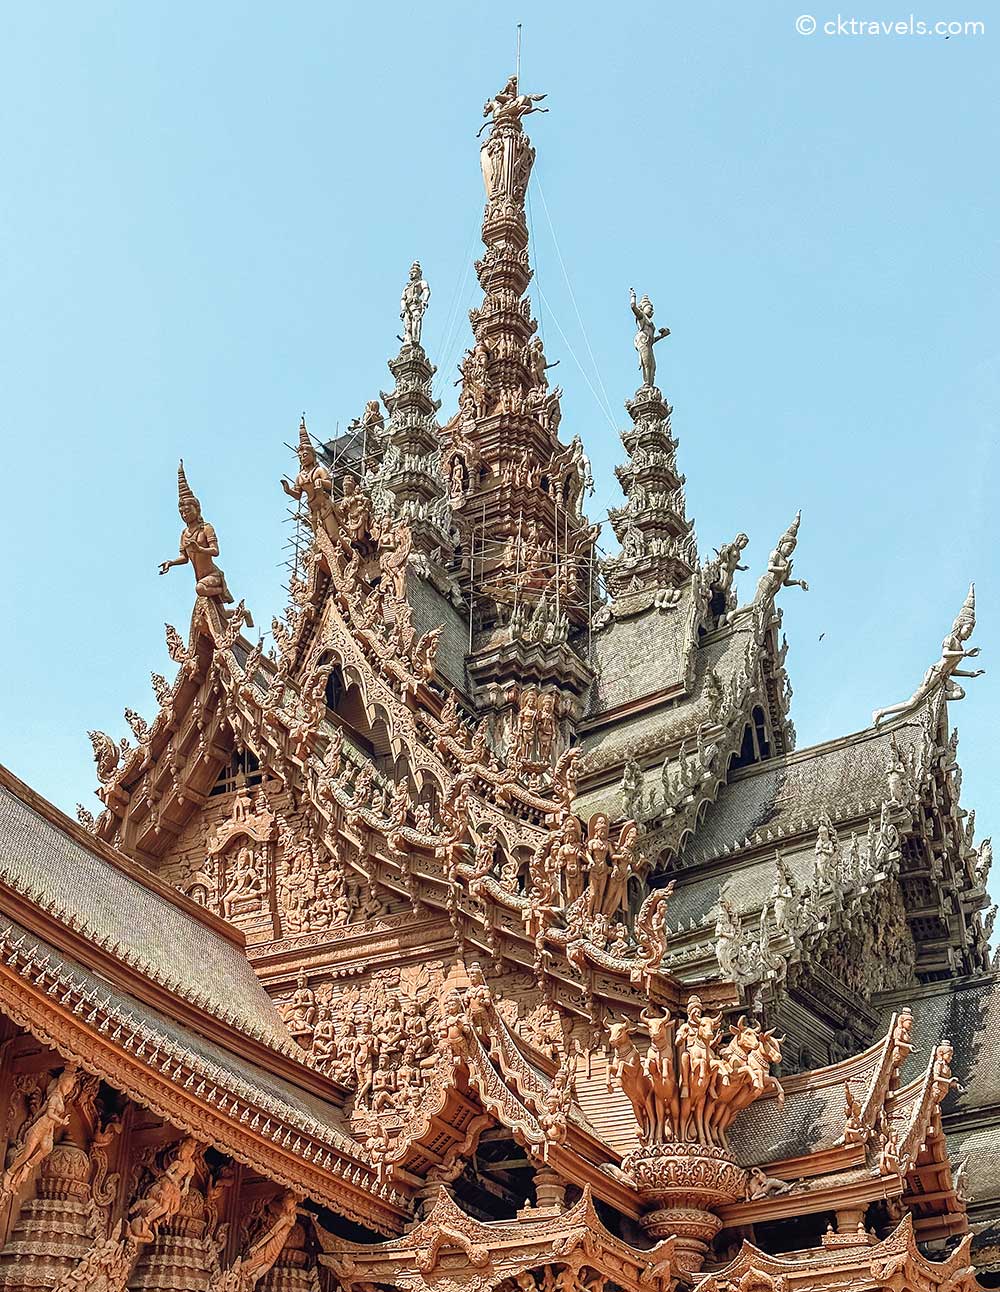 Sanctuary of Truth, Pattaya Thailand